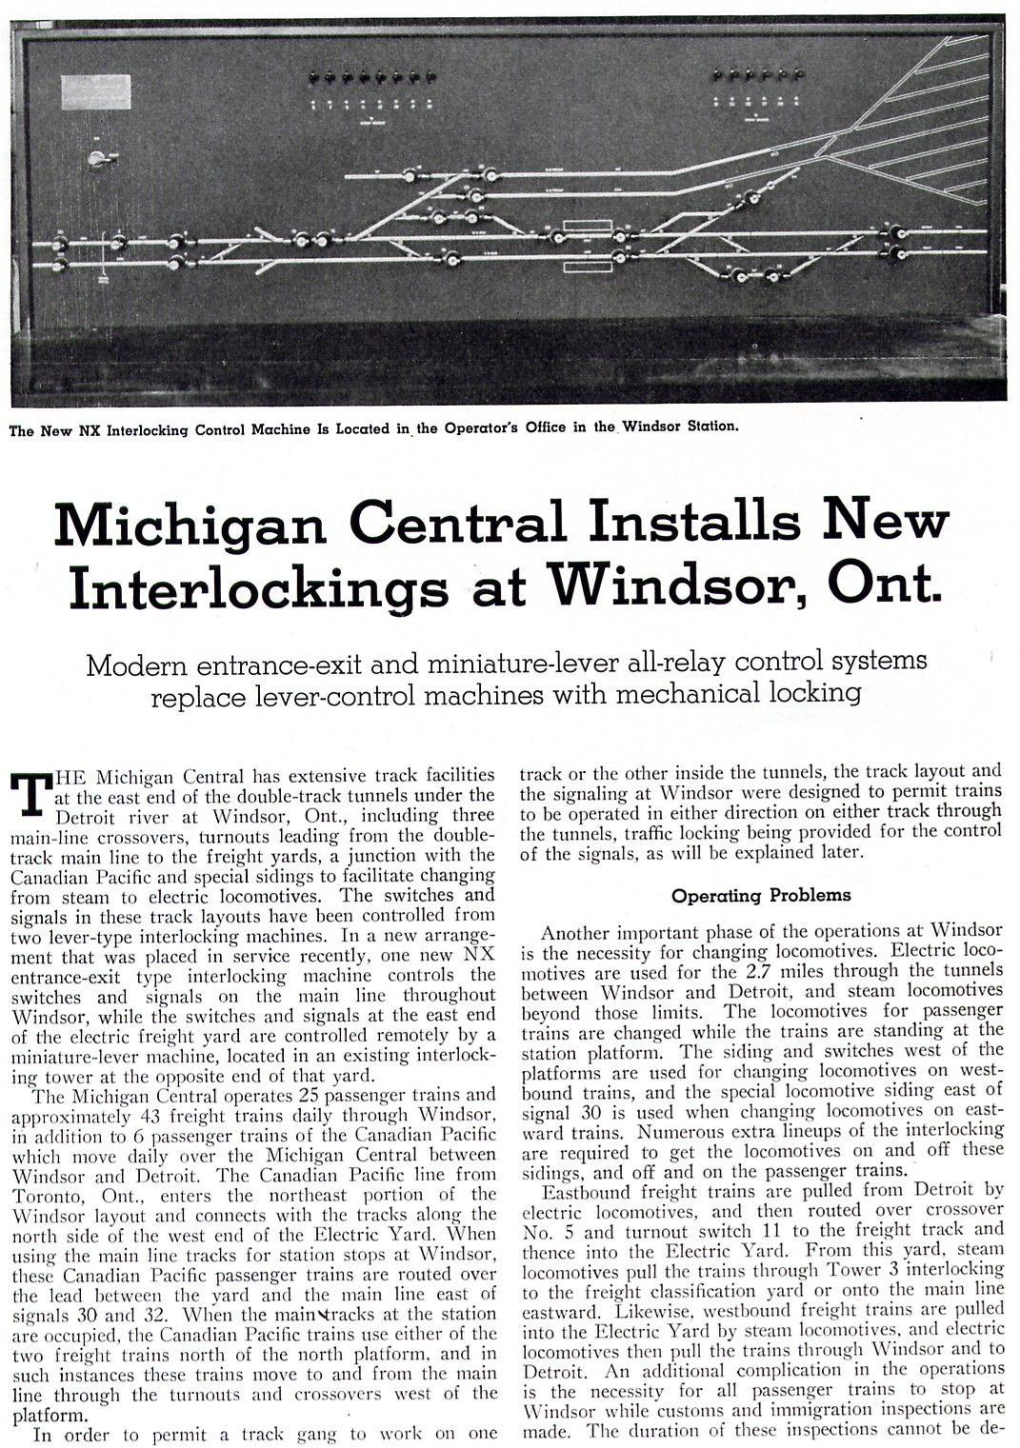 Michigan Central Windsor Interlocking Installation